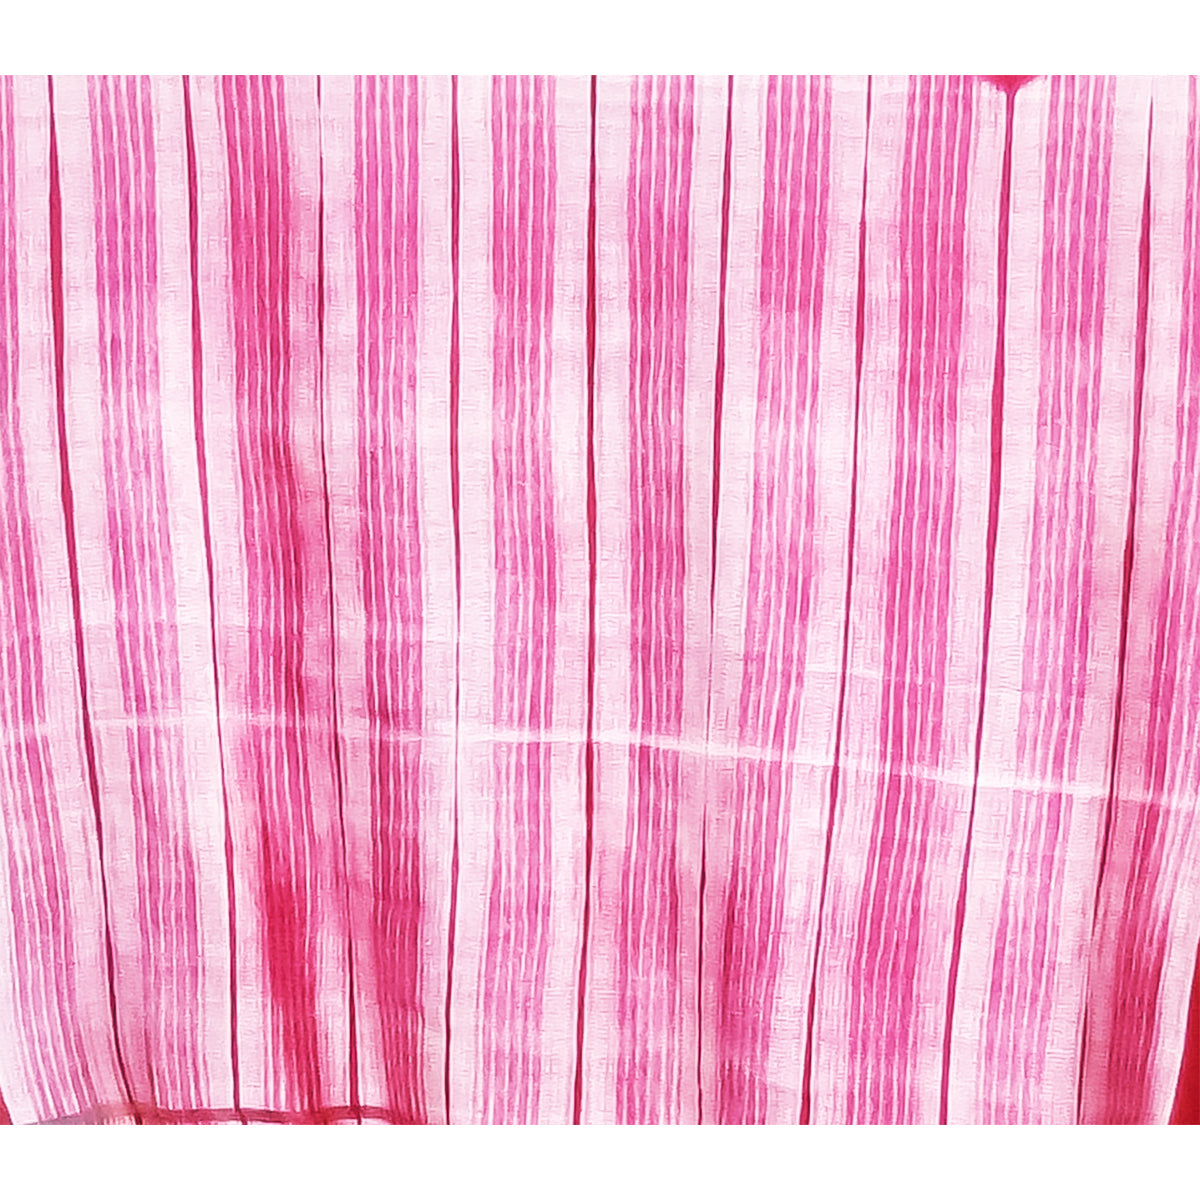 Deep Reddish Pink Maheshwari Saree with Arjuna Tree Motifs Body - Blouse